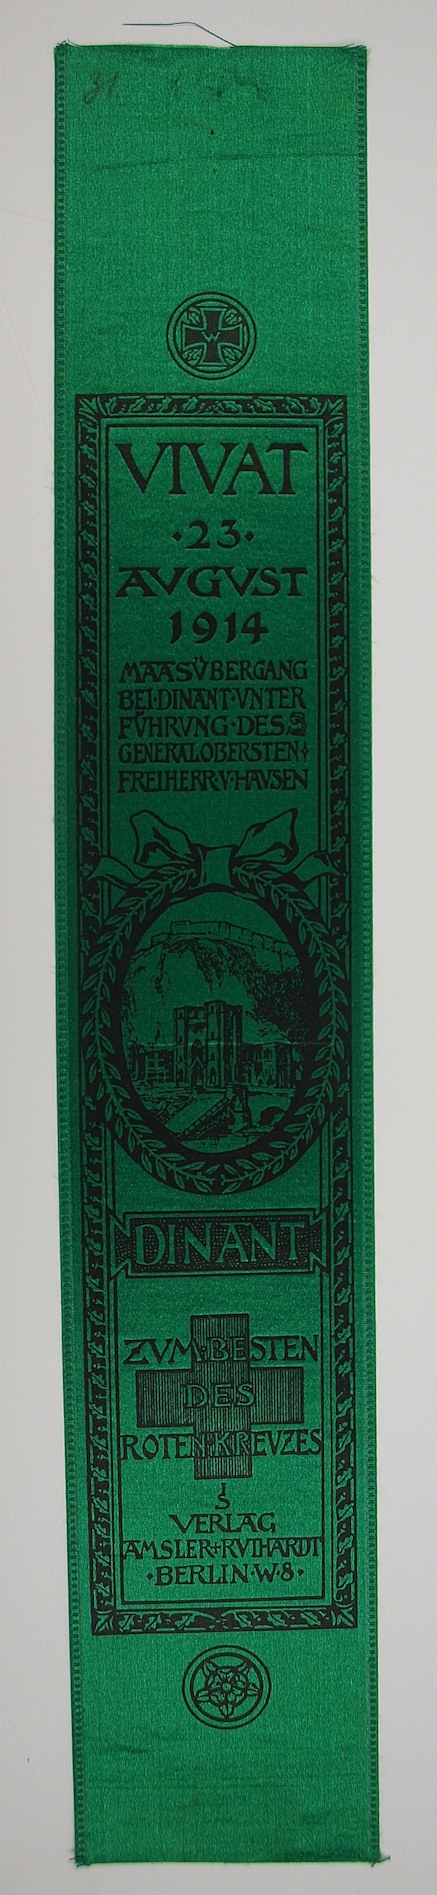 Vivatband 23. August 1914 Maasübergang Dinant unter Führung des Generalobersten Freiherr von Hausen (Museum Weißenfels - Schloss Neu-Augustusburg CC BY-NC-SA)